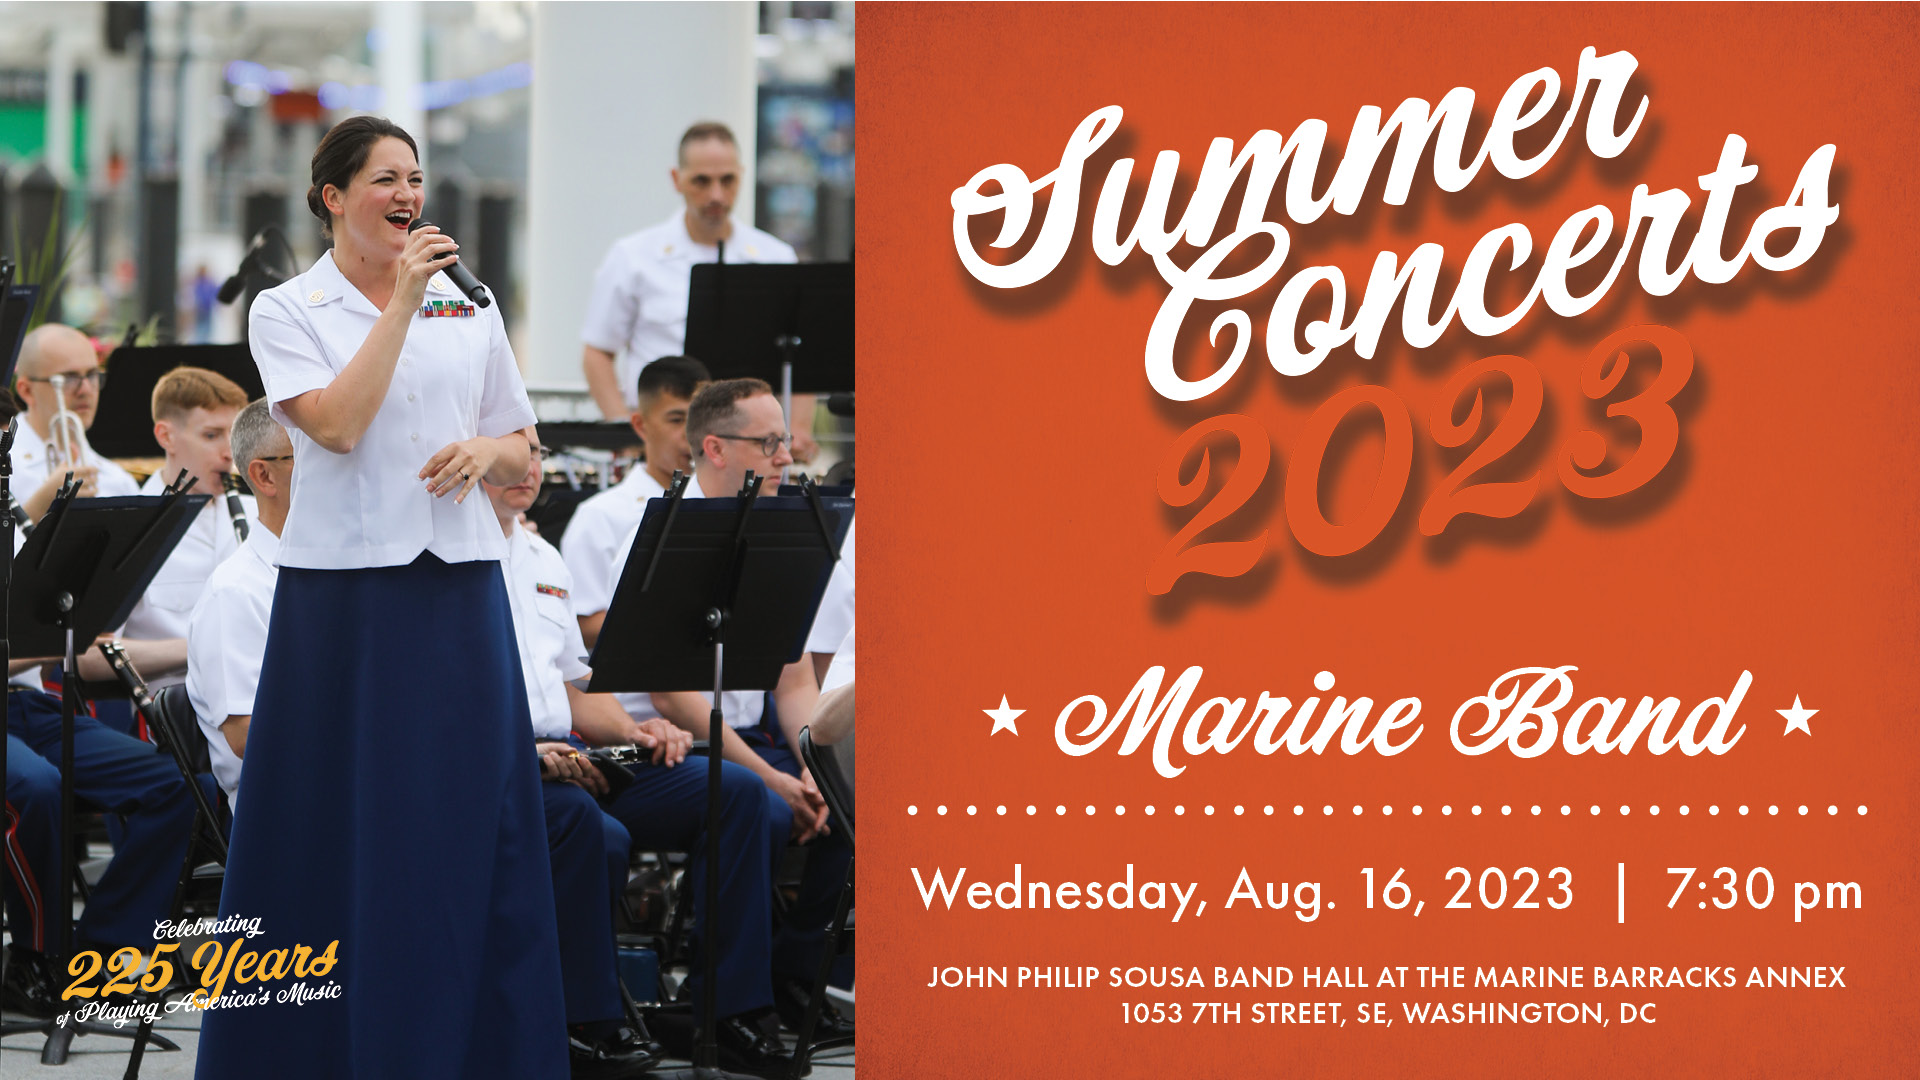 Marine Band Concerts - Aug. 16/17